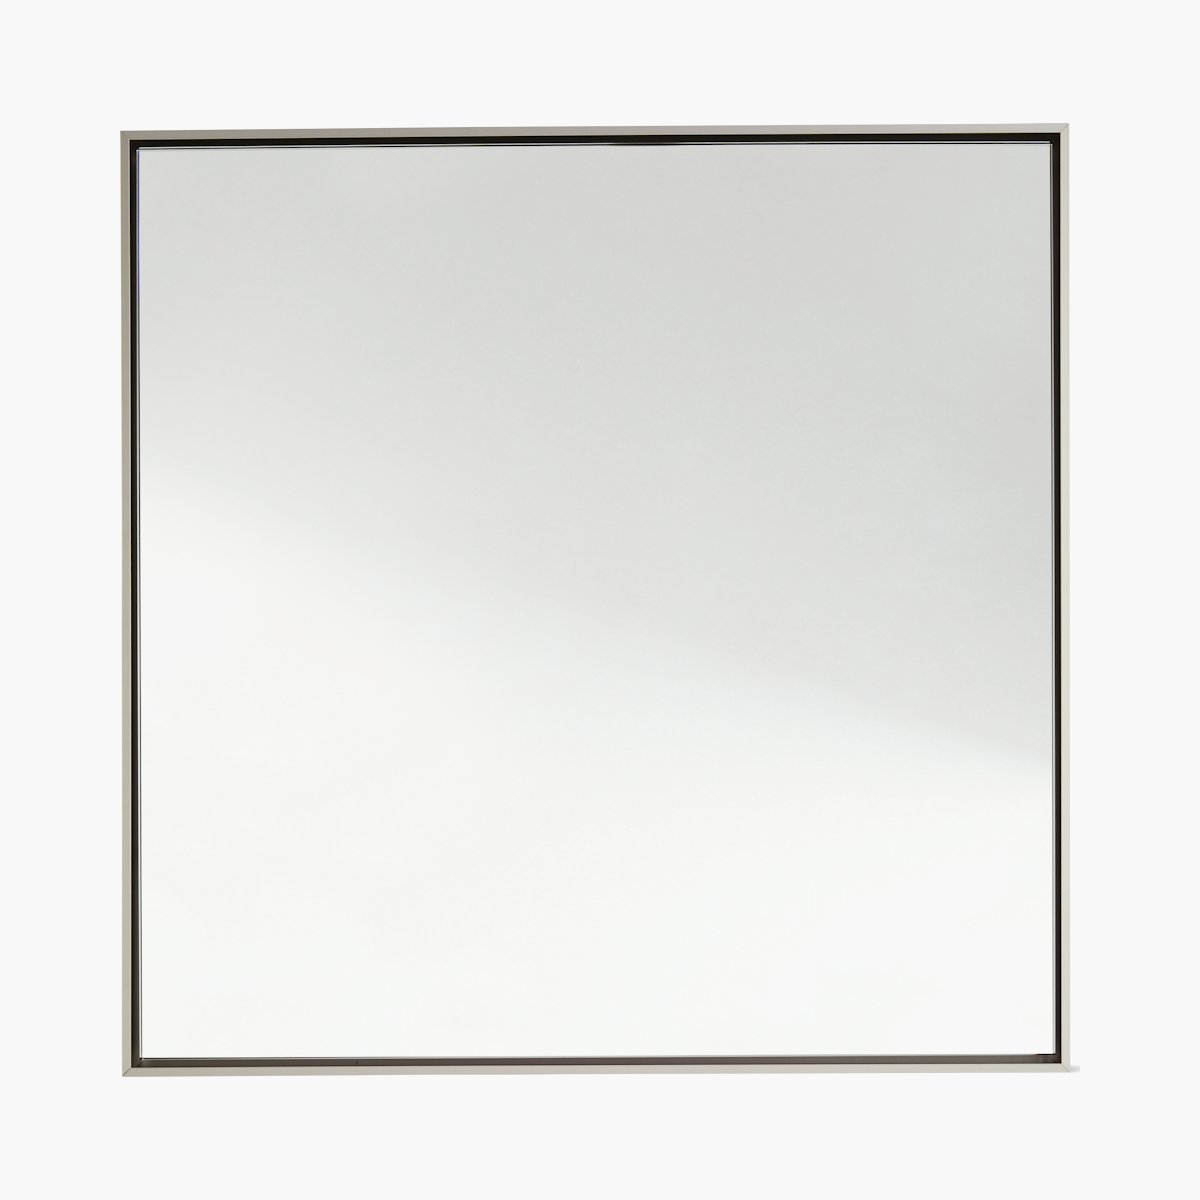 Mondrian Wall Mirror, 22"x22"